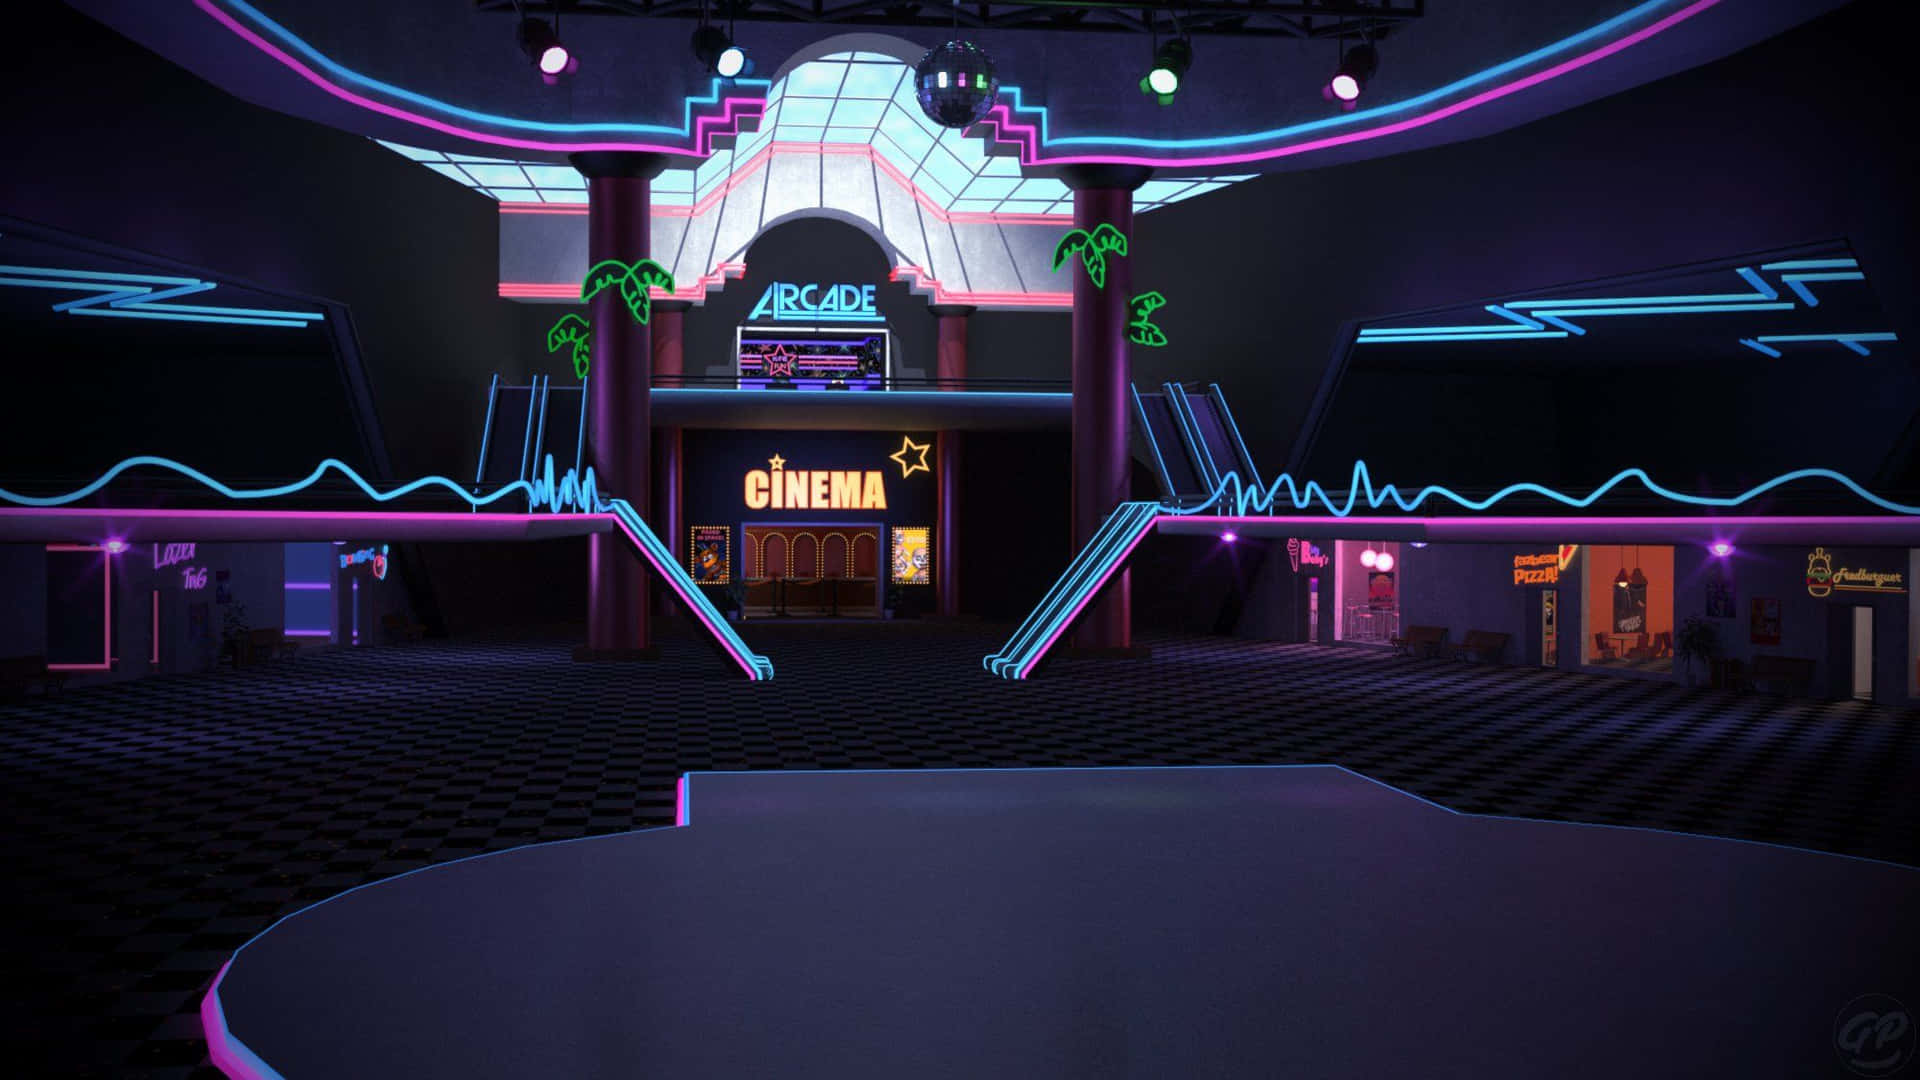 Cinema And Arcade Security Breach Background